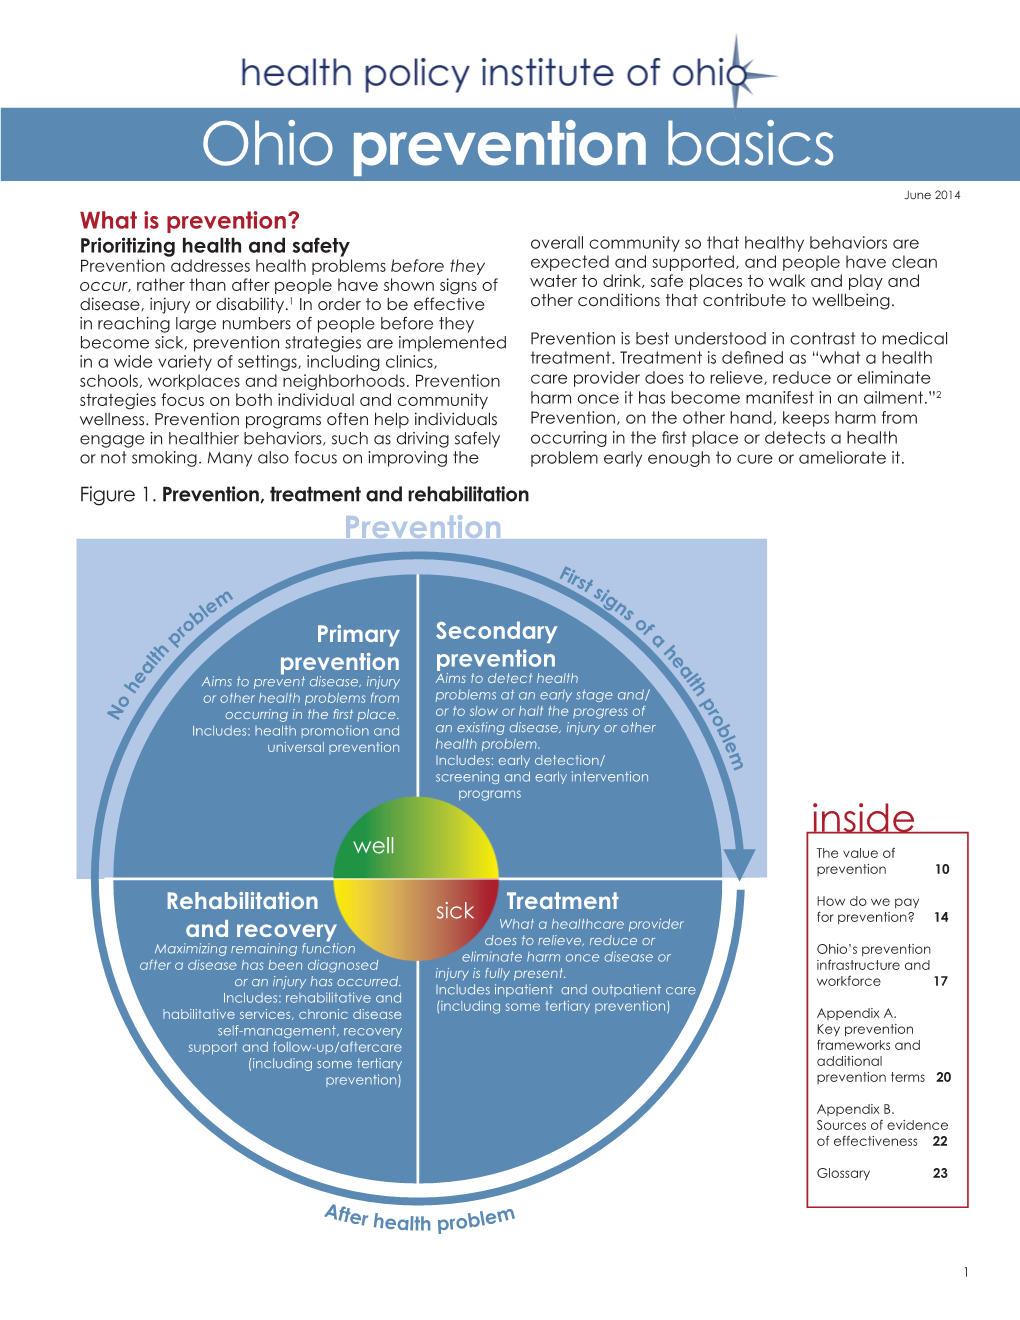 Ohio Prevention Basics